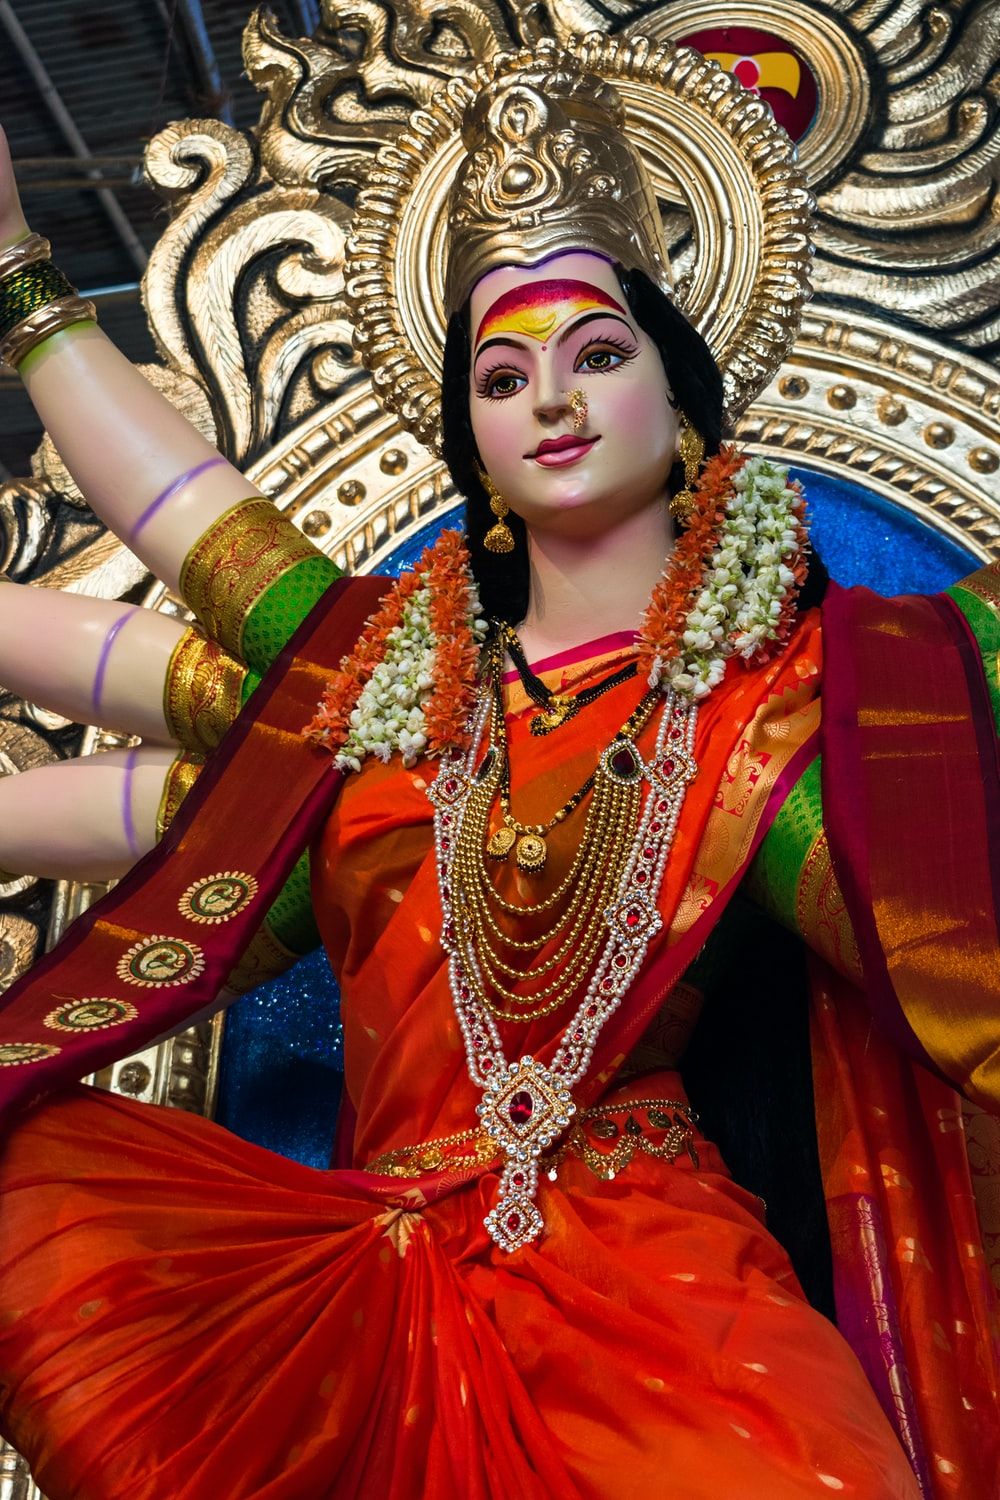 Durga Picture. Download Free Image